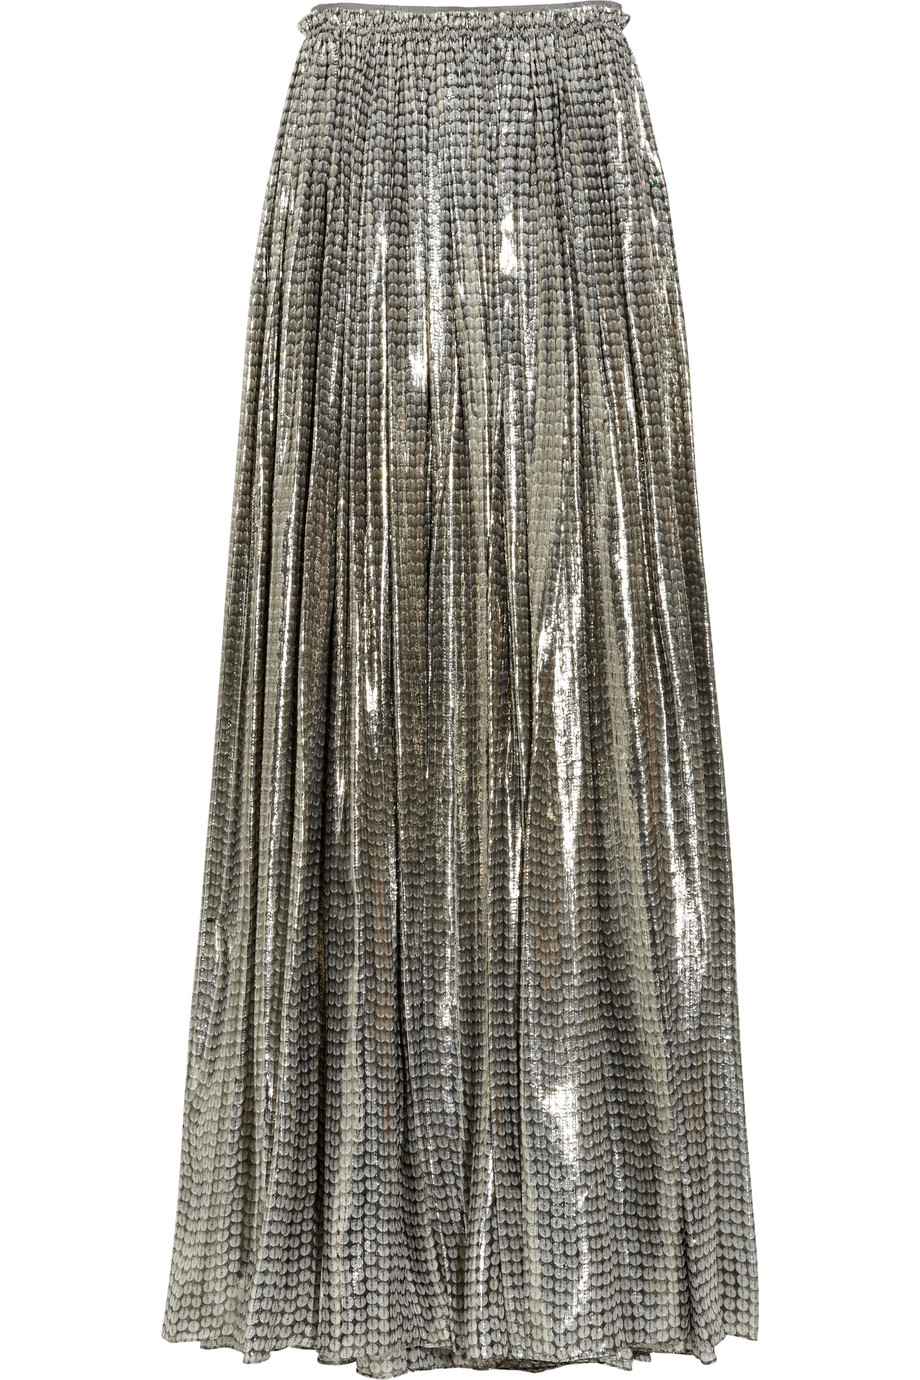 Lyst - Lanvin Printed Silk-blend Lamé Maxi Skirt in Metallic